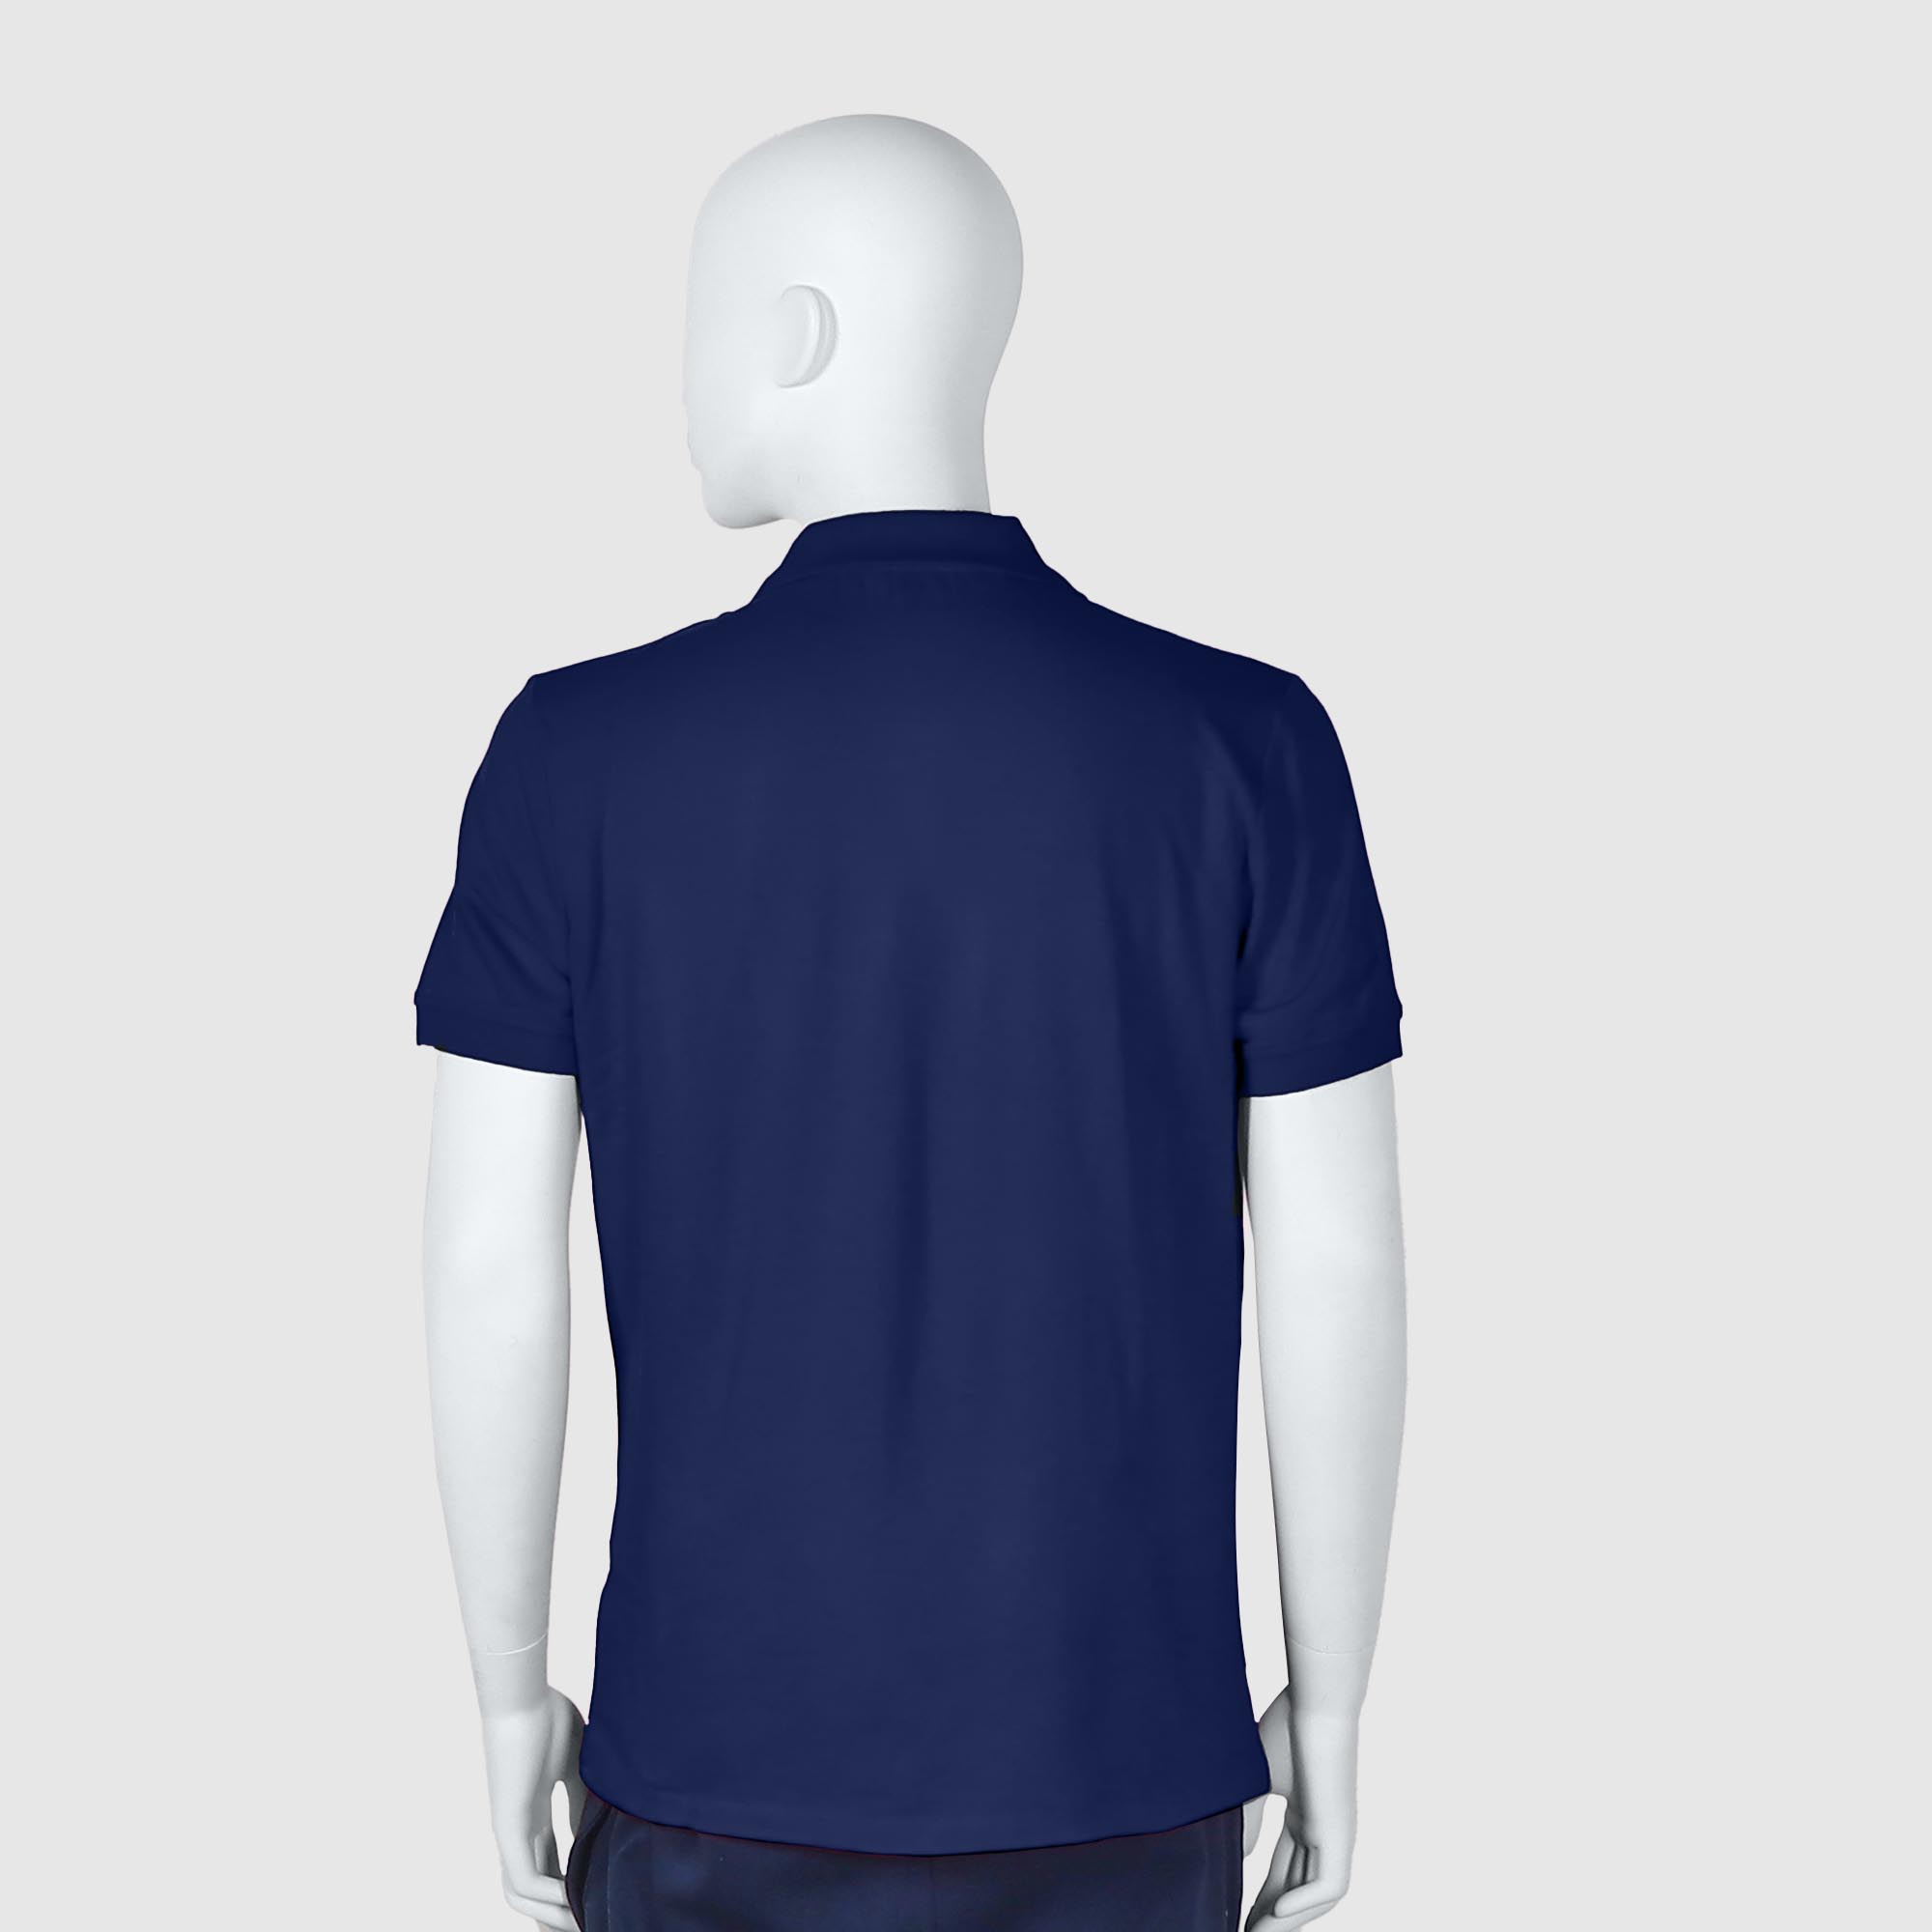 Мужская футболка-поло Diva Teks синяя (DTD-10), цвет синий, размер 54-56 - фото 2